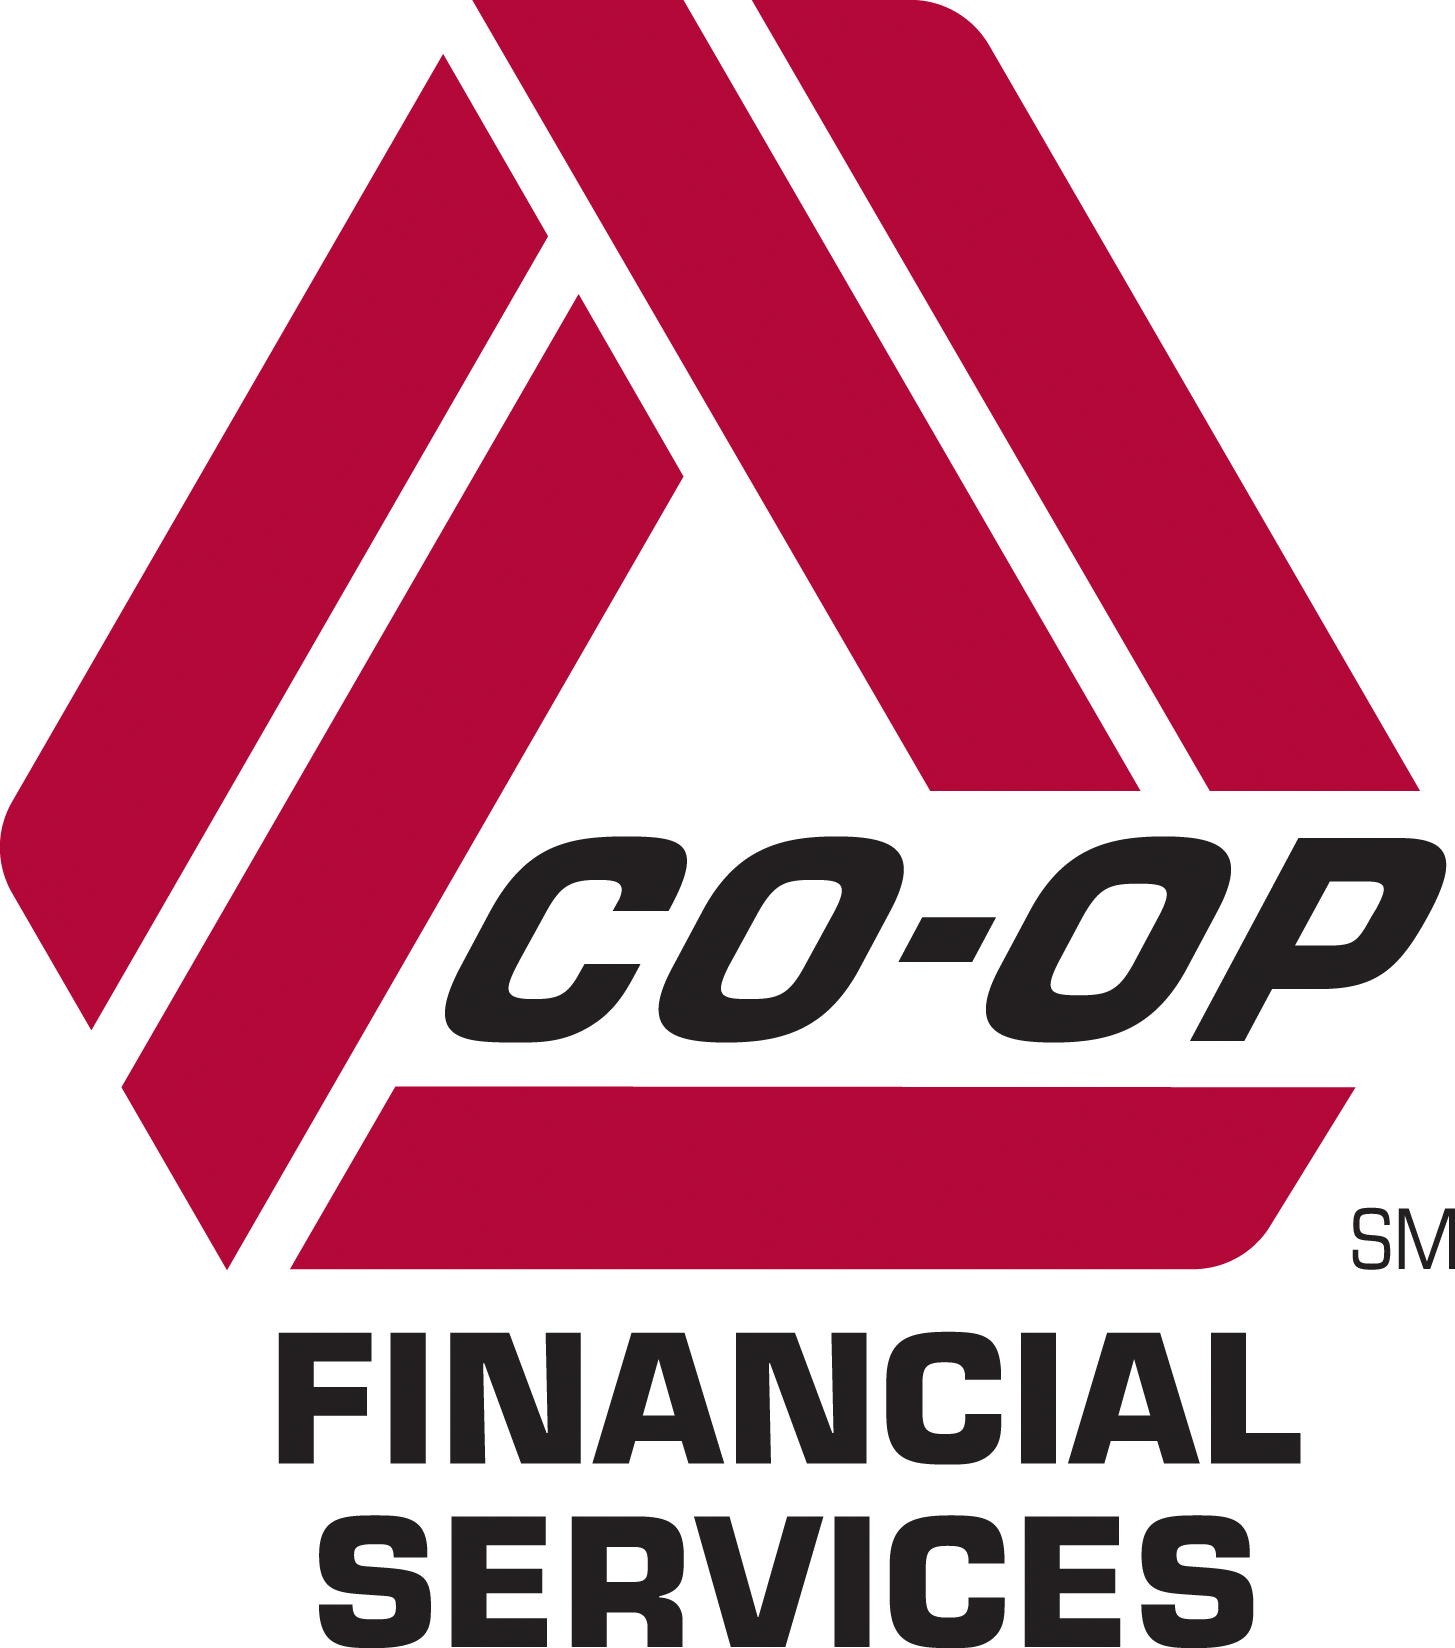 Co-op Financial Services logo